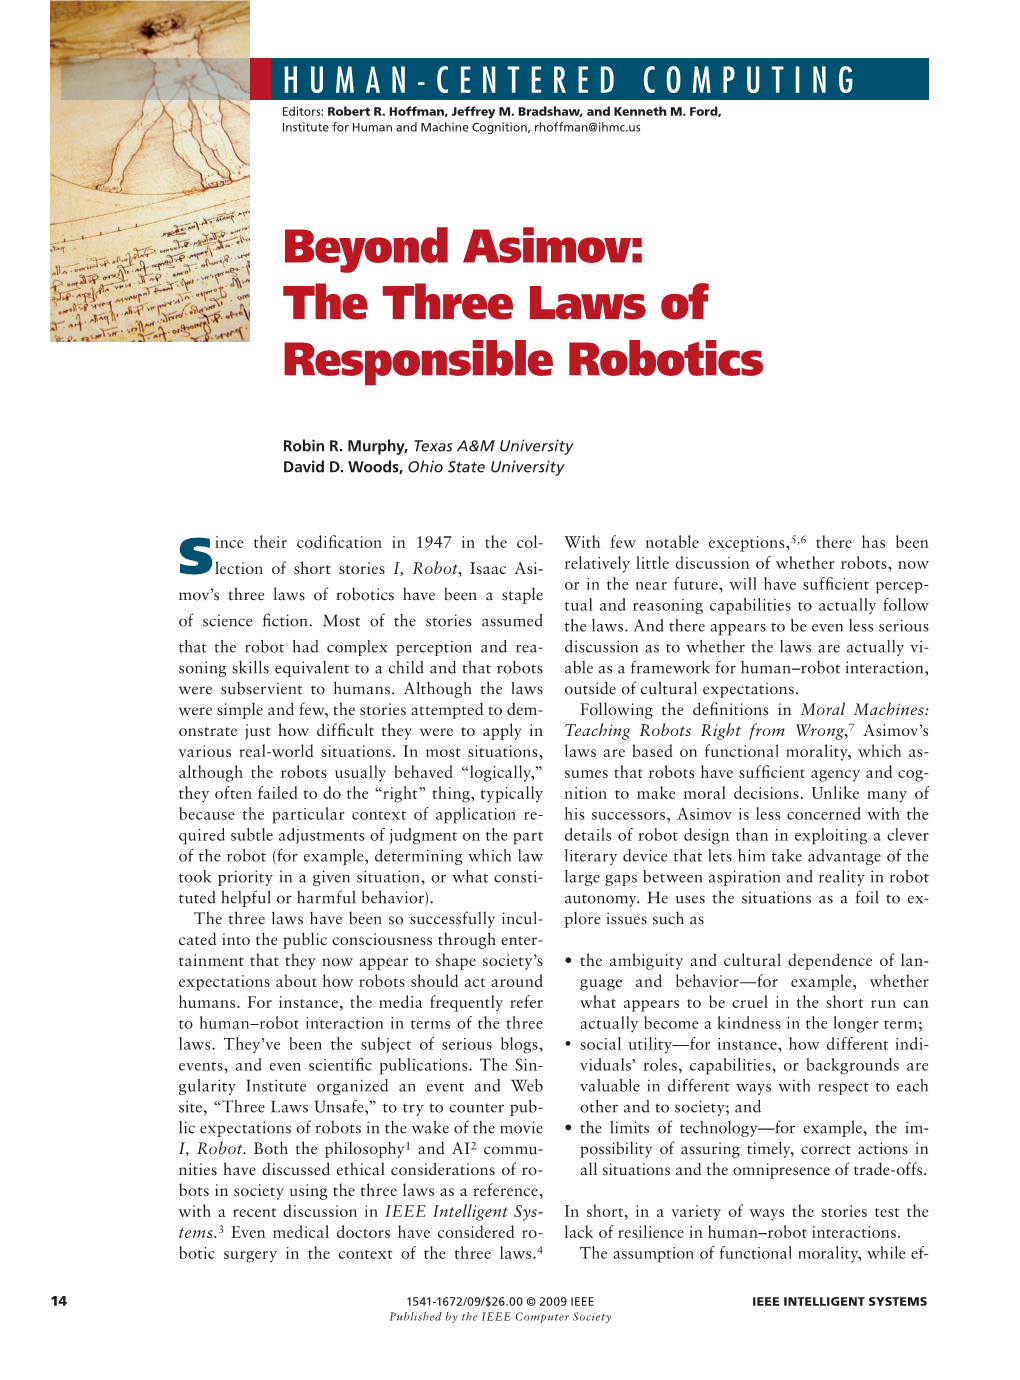 Beyond Asimov: the Three Laws of Responsible Robotics